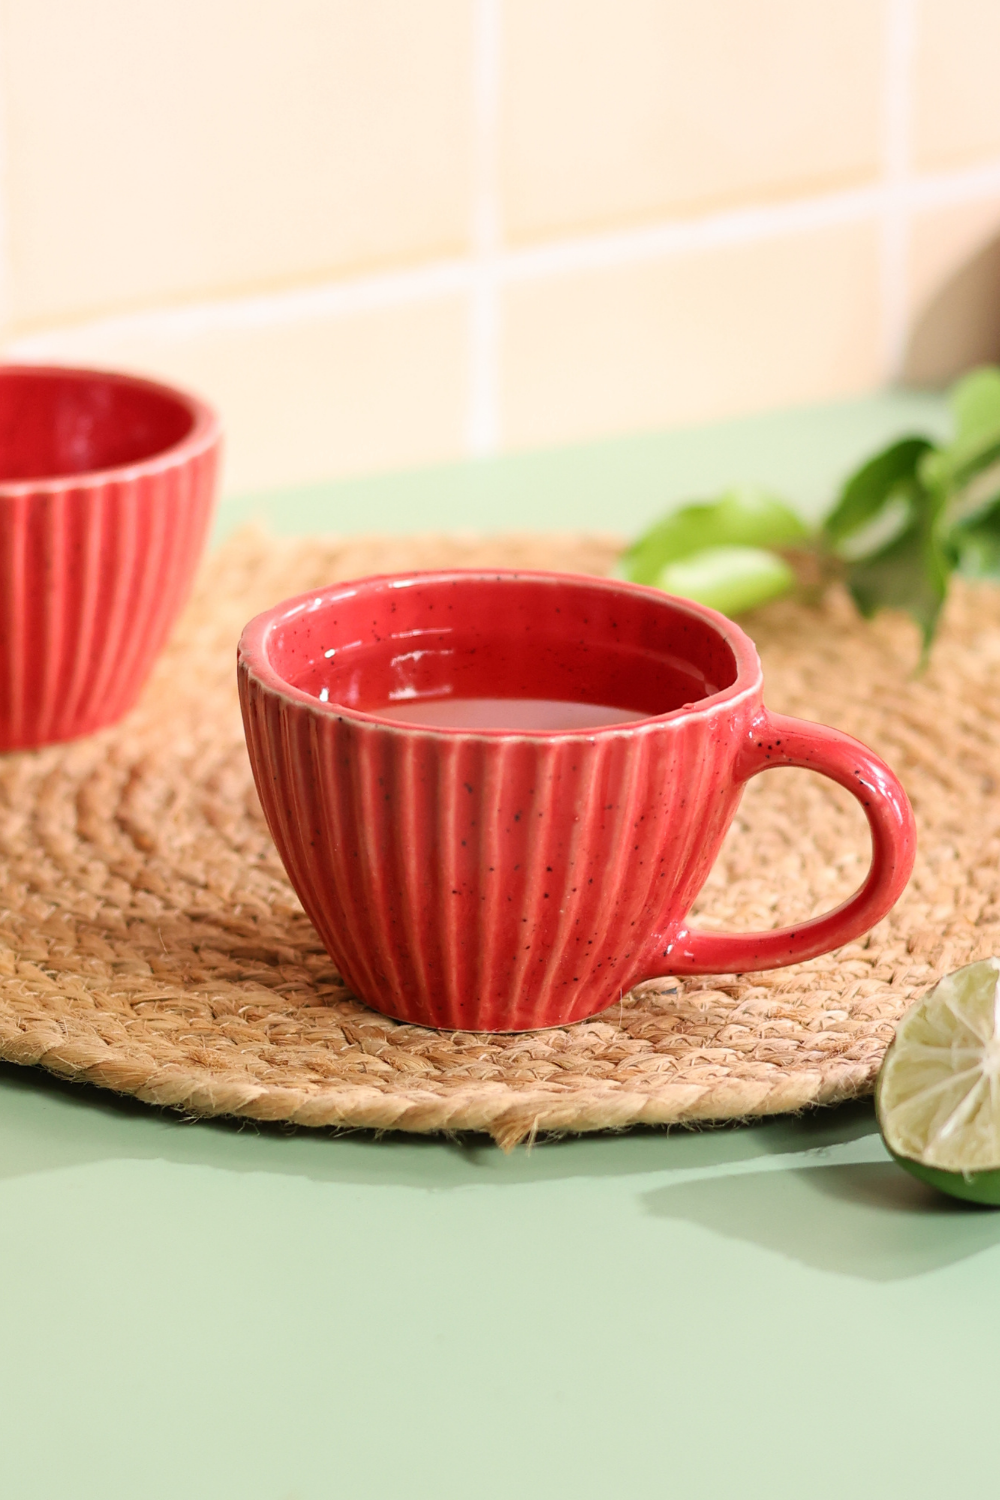 Red striped coffee mug with tea inside 